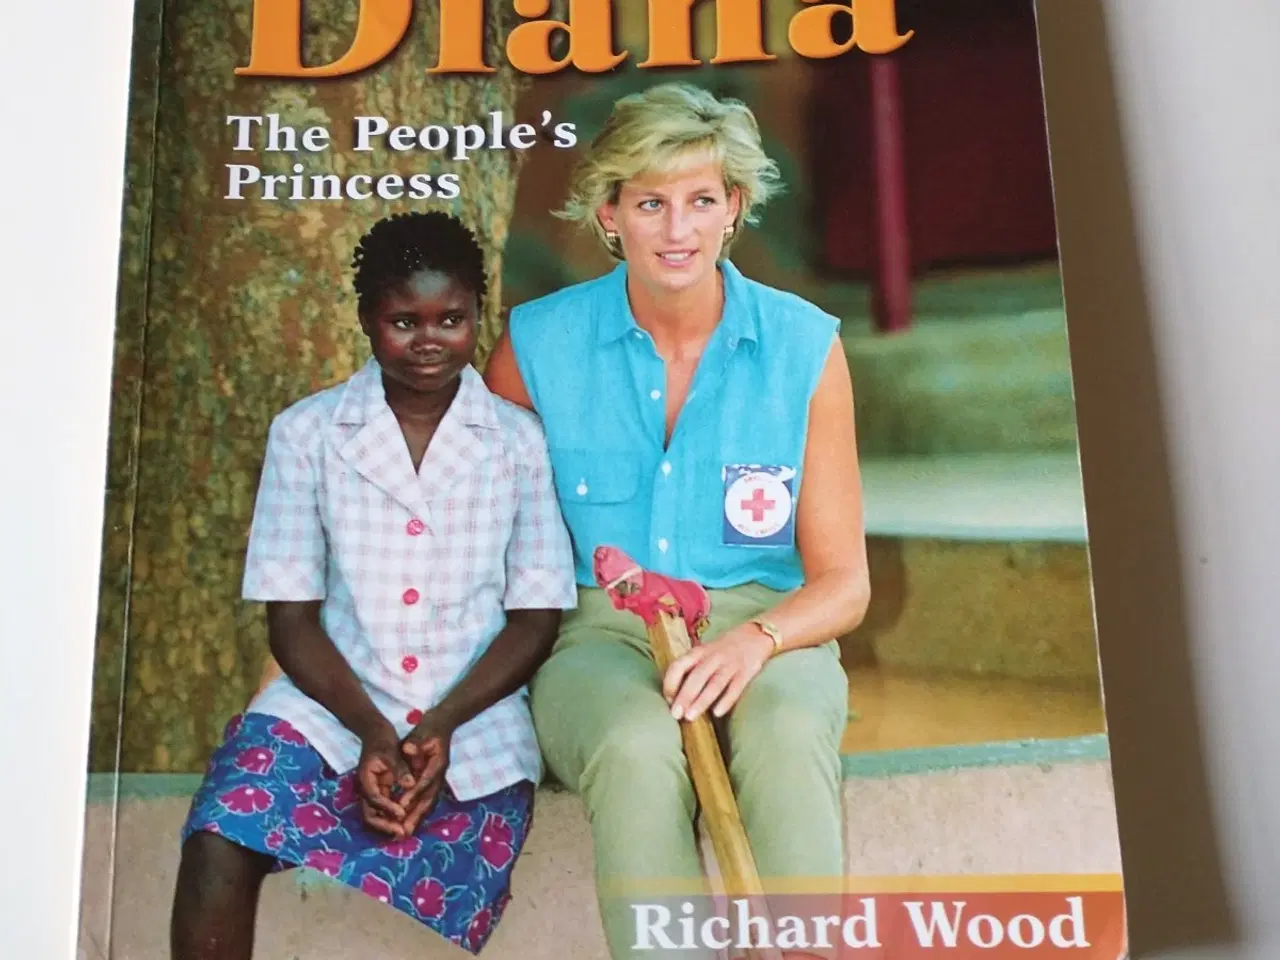 Billede 1 - Diana - The People's Princess